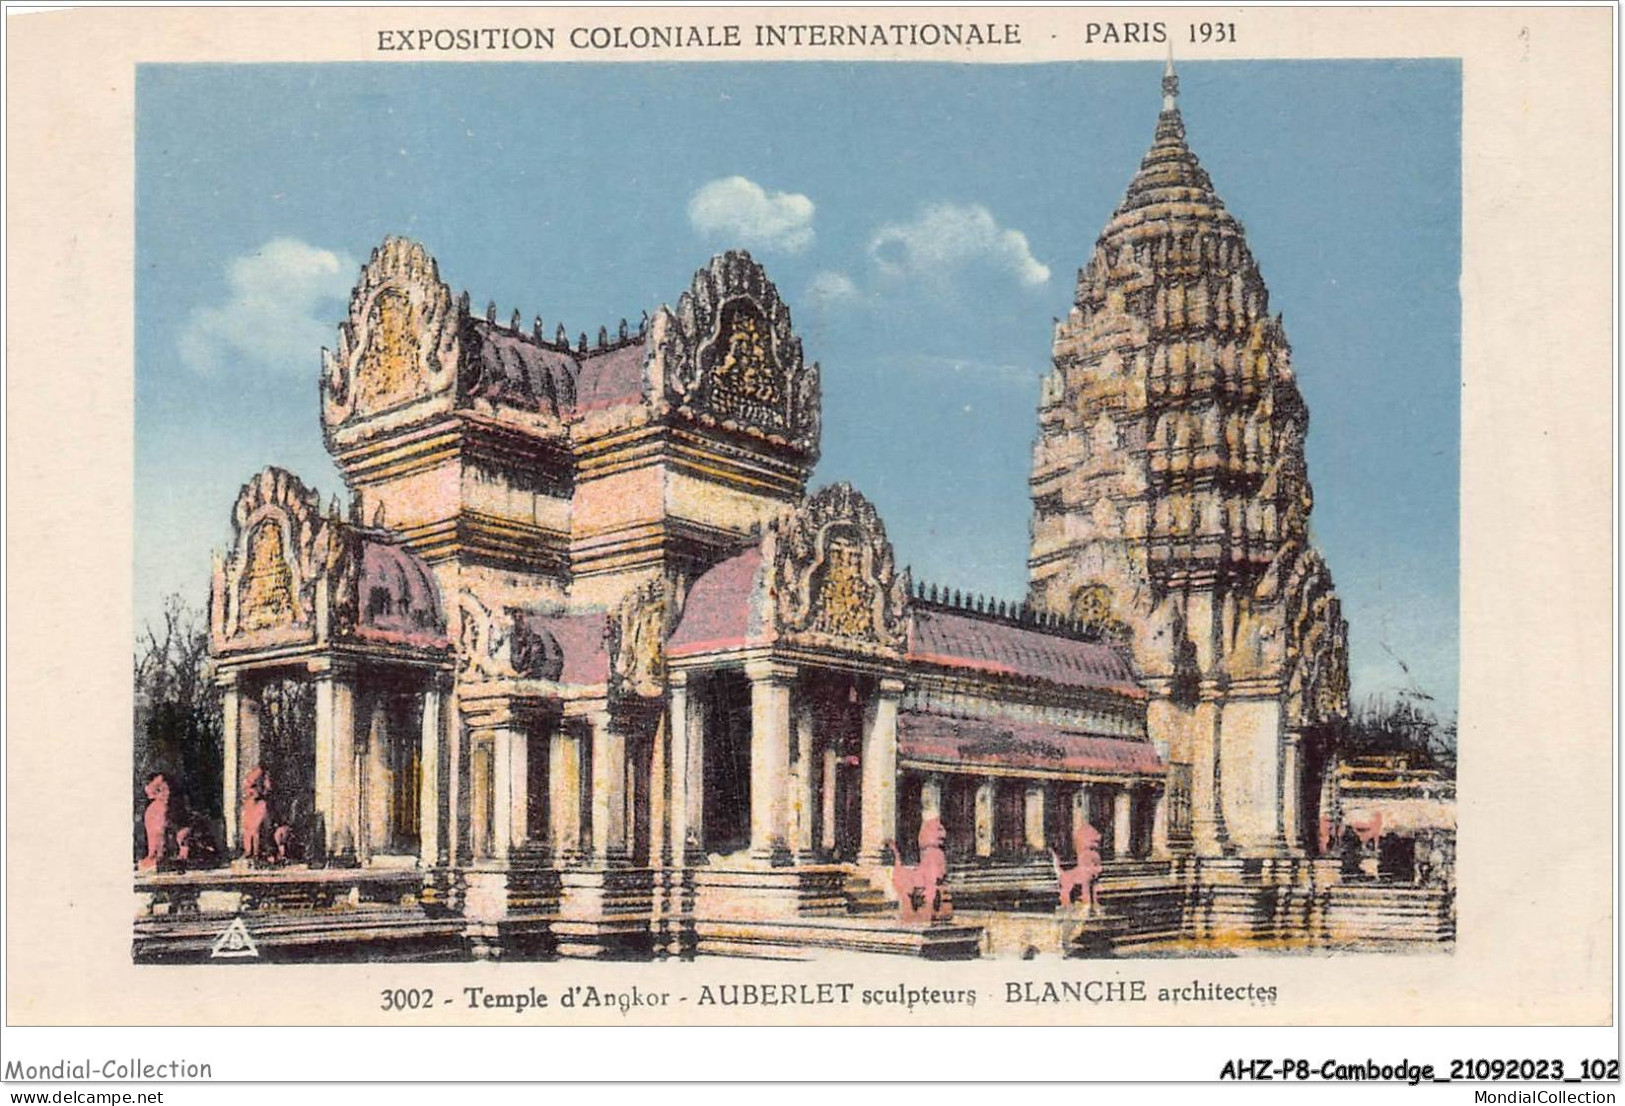 AHZP8-CAMBODGE-0734 - EXPOSITION COLONIALE INTERNATIONALE - PARIS 1931 - TEMPLE D'ANGKOR - AUBERLET SCULPTEURS - Cambodia